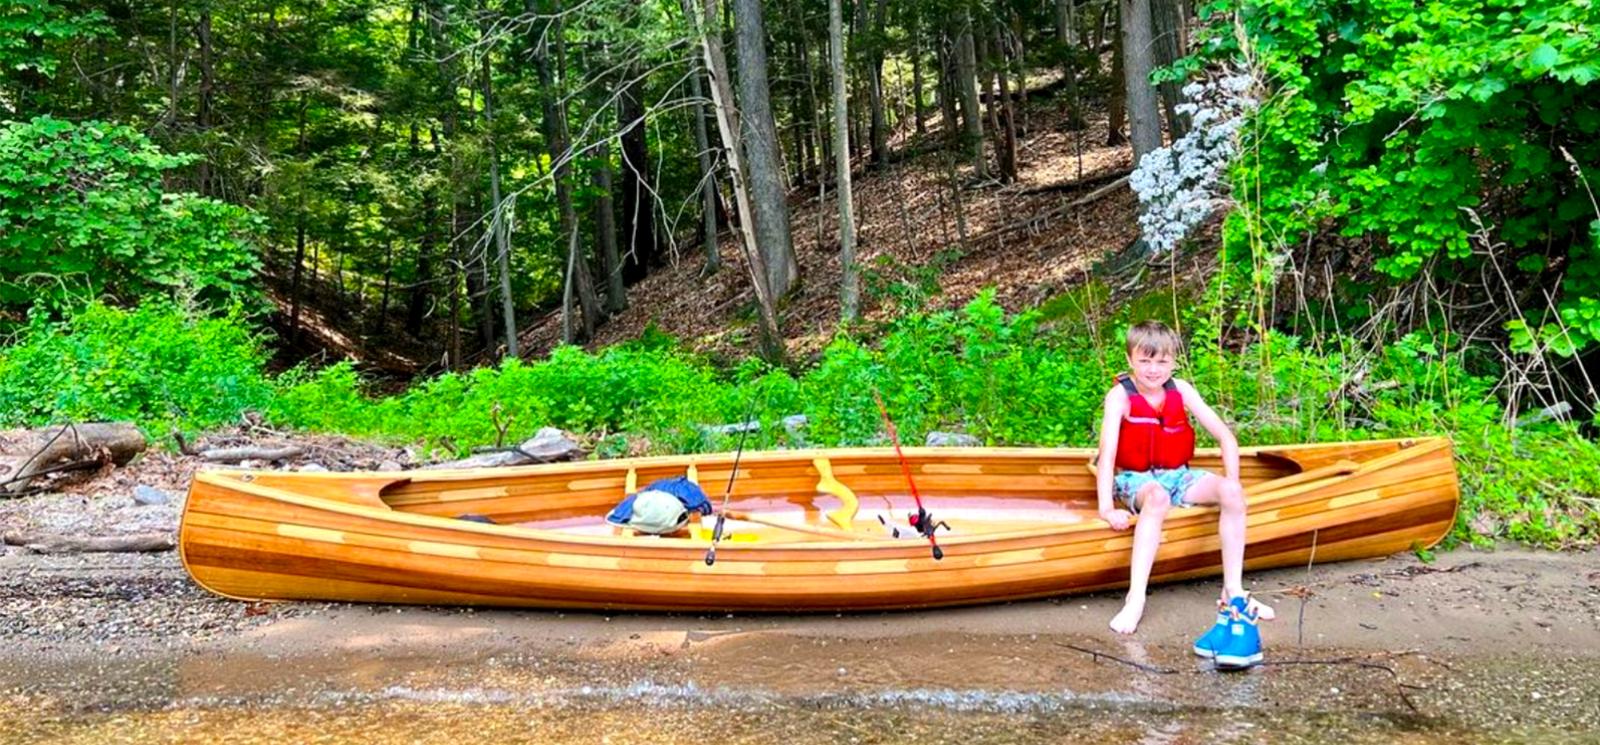 Boy in a canoe with fishing poles (Instagram@seankeenan)